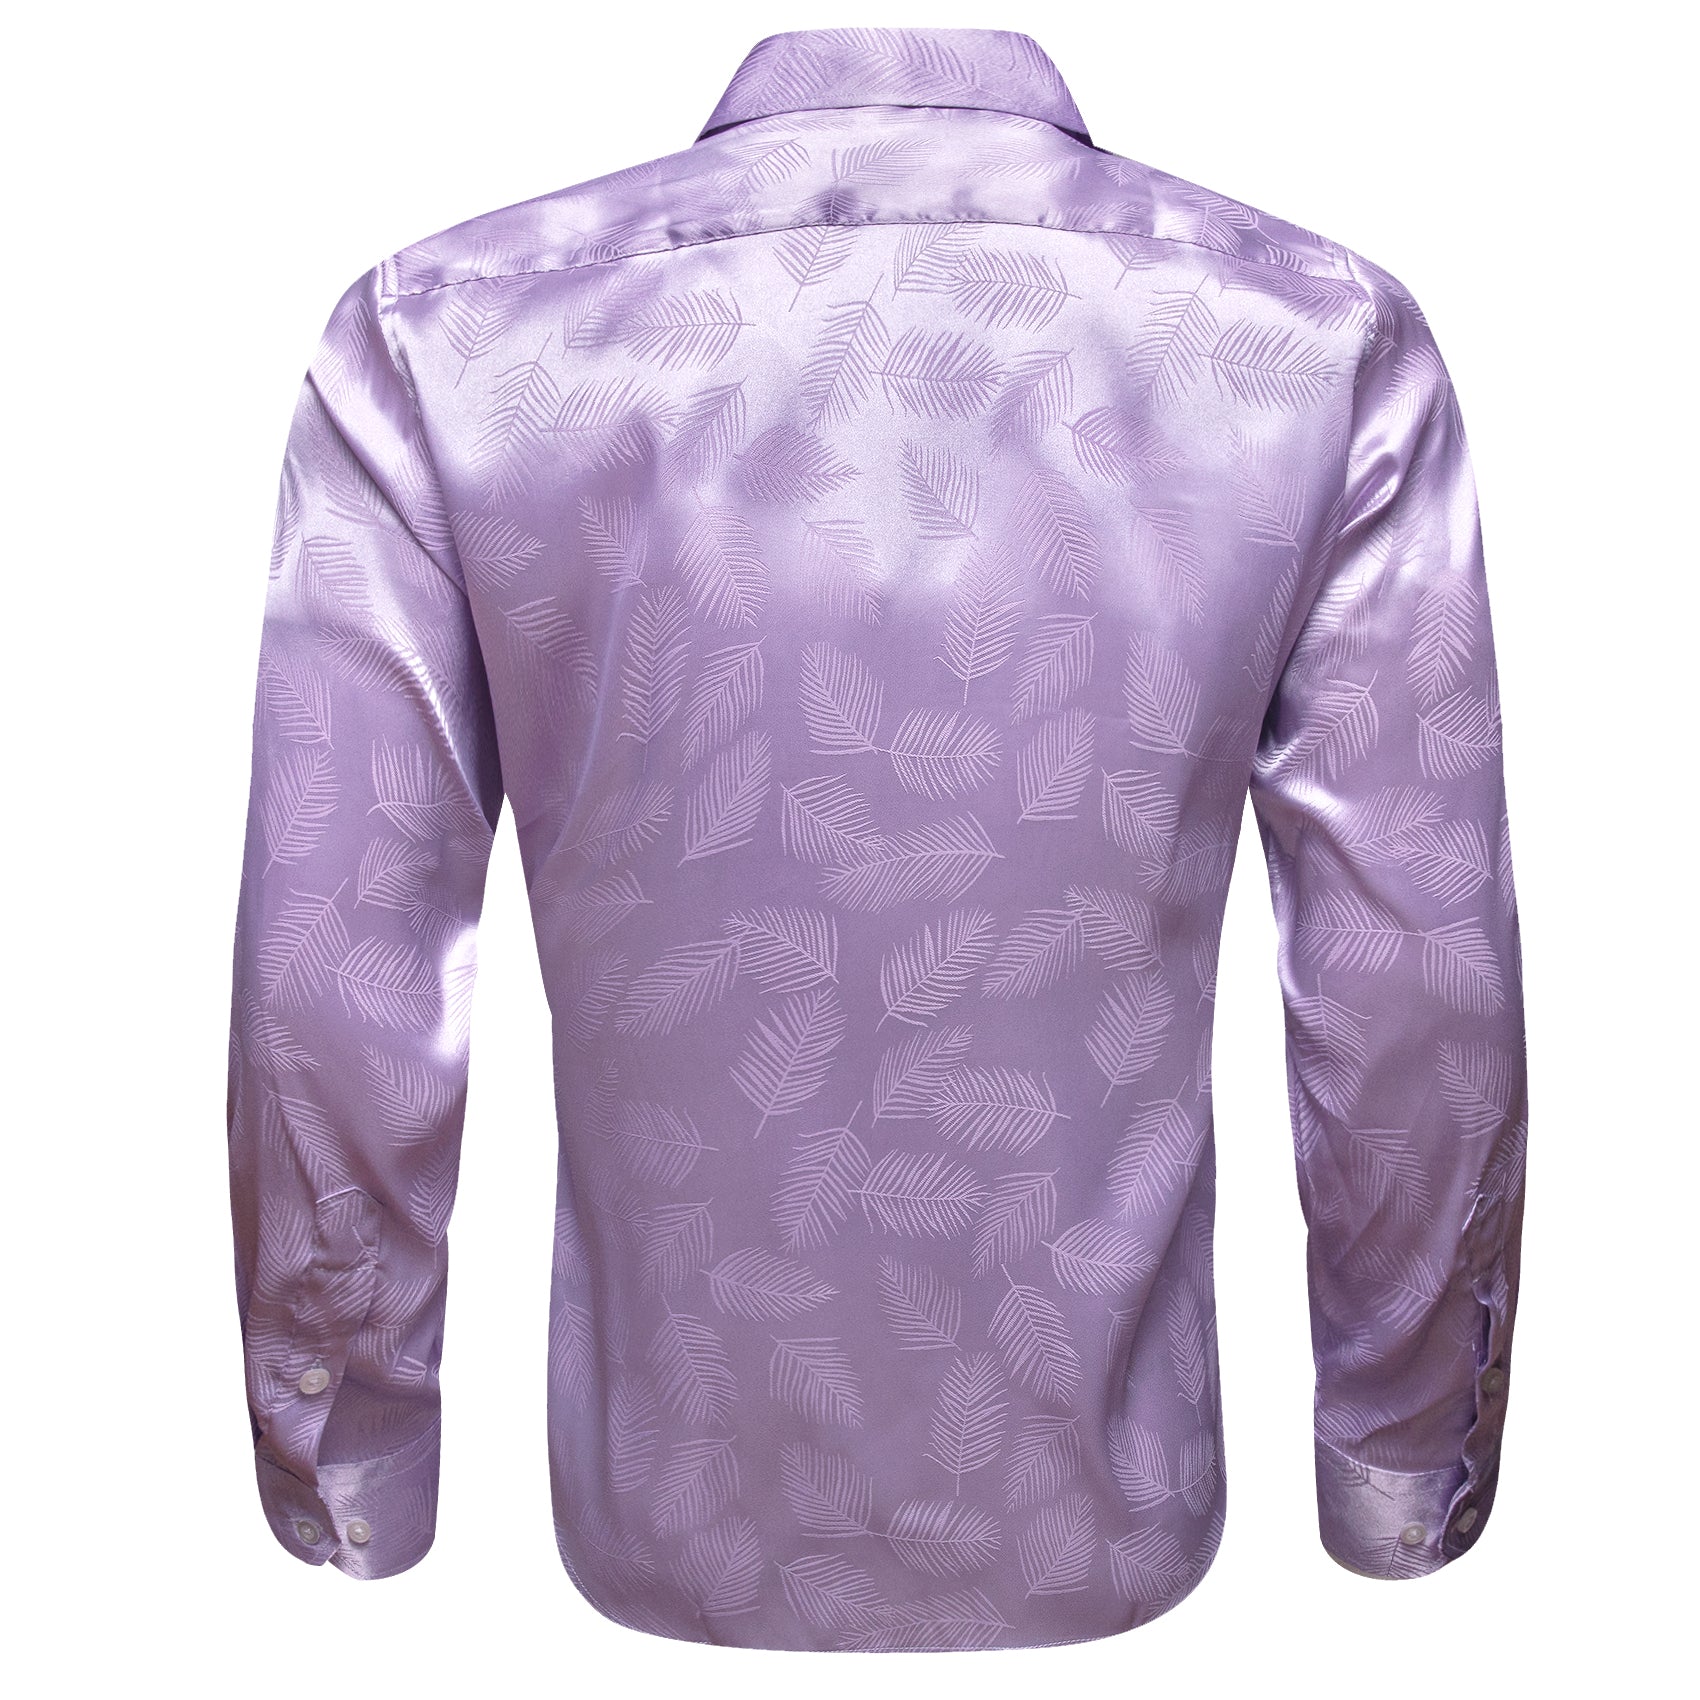 Barry.wang Purple Feather Floral Silk Men's Shirt